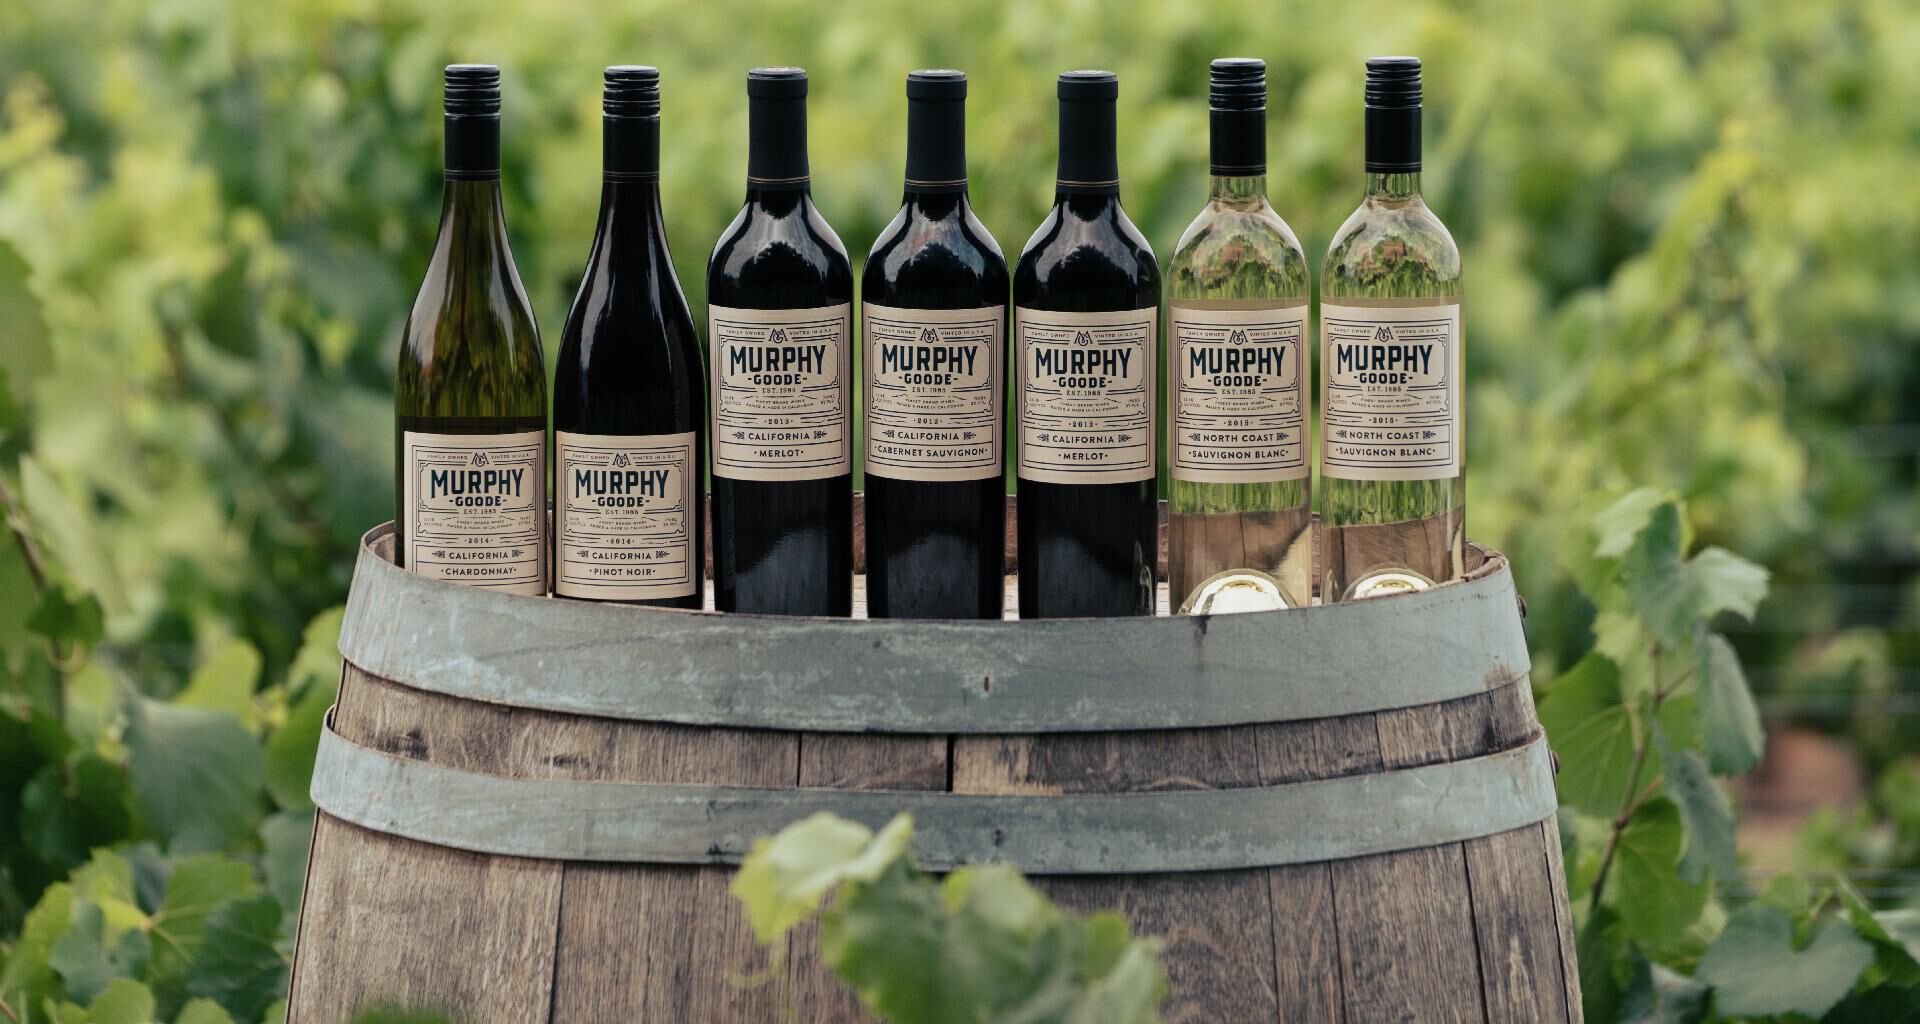 Murphy-Goode wine bottles lined up on wine barrel.